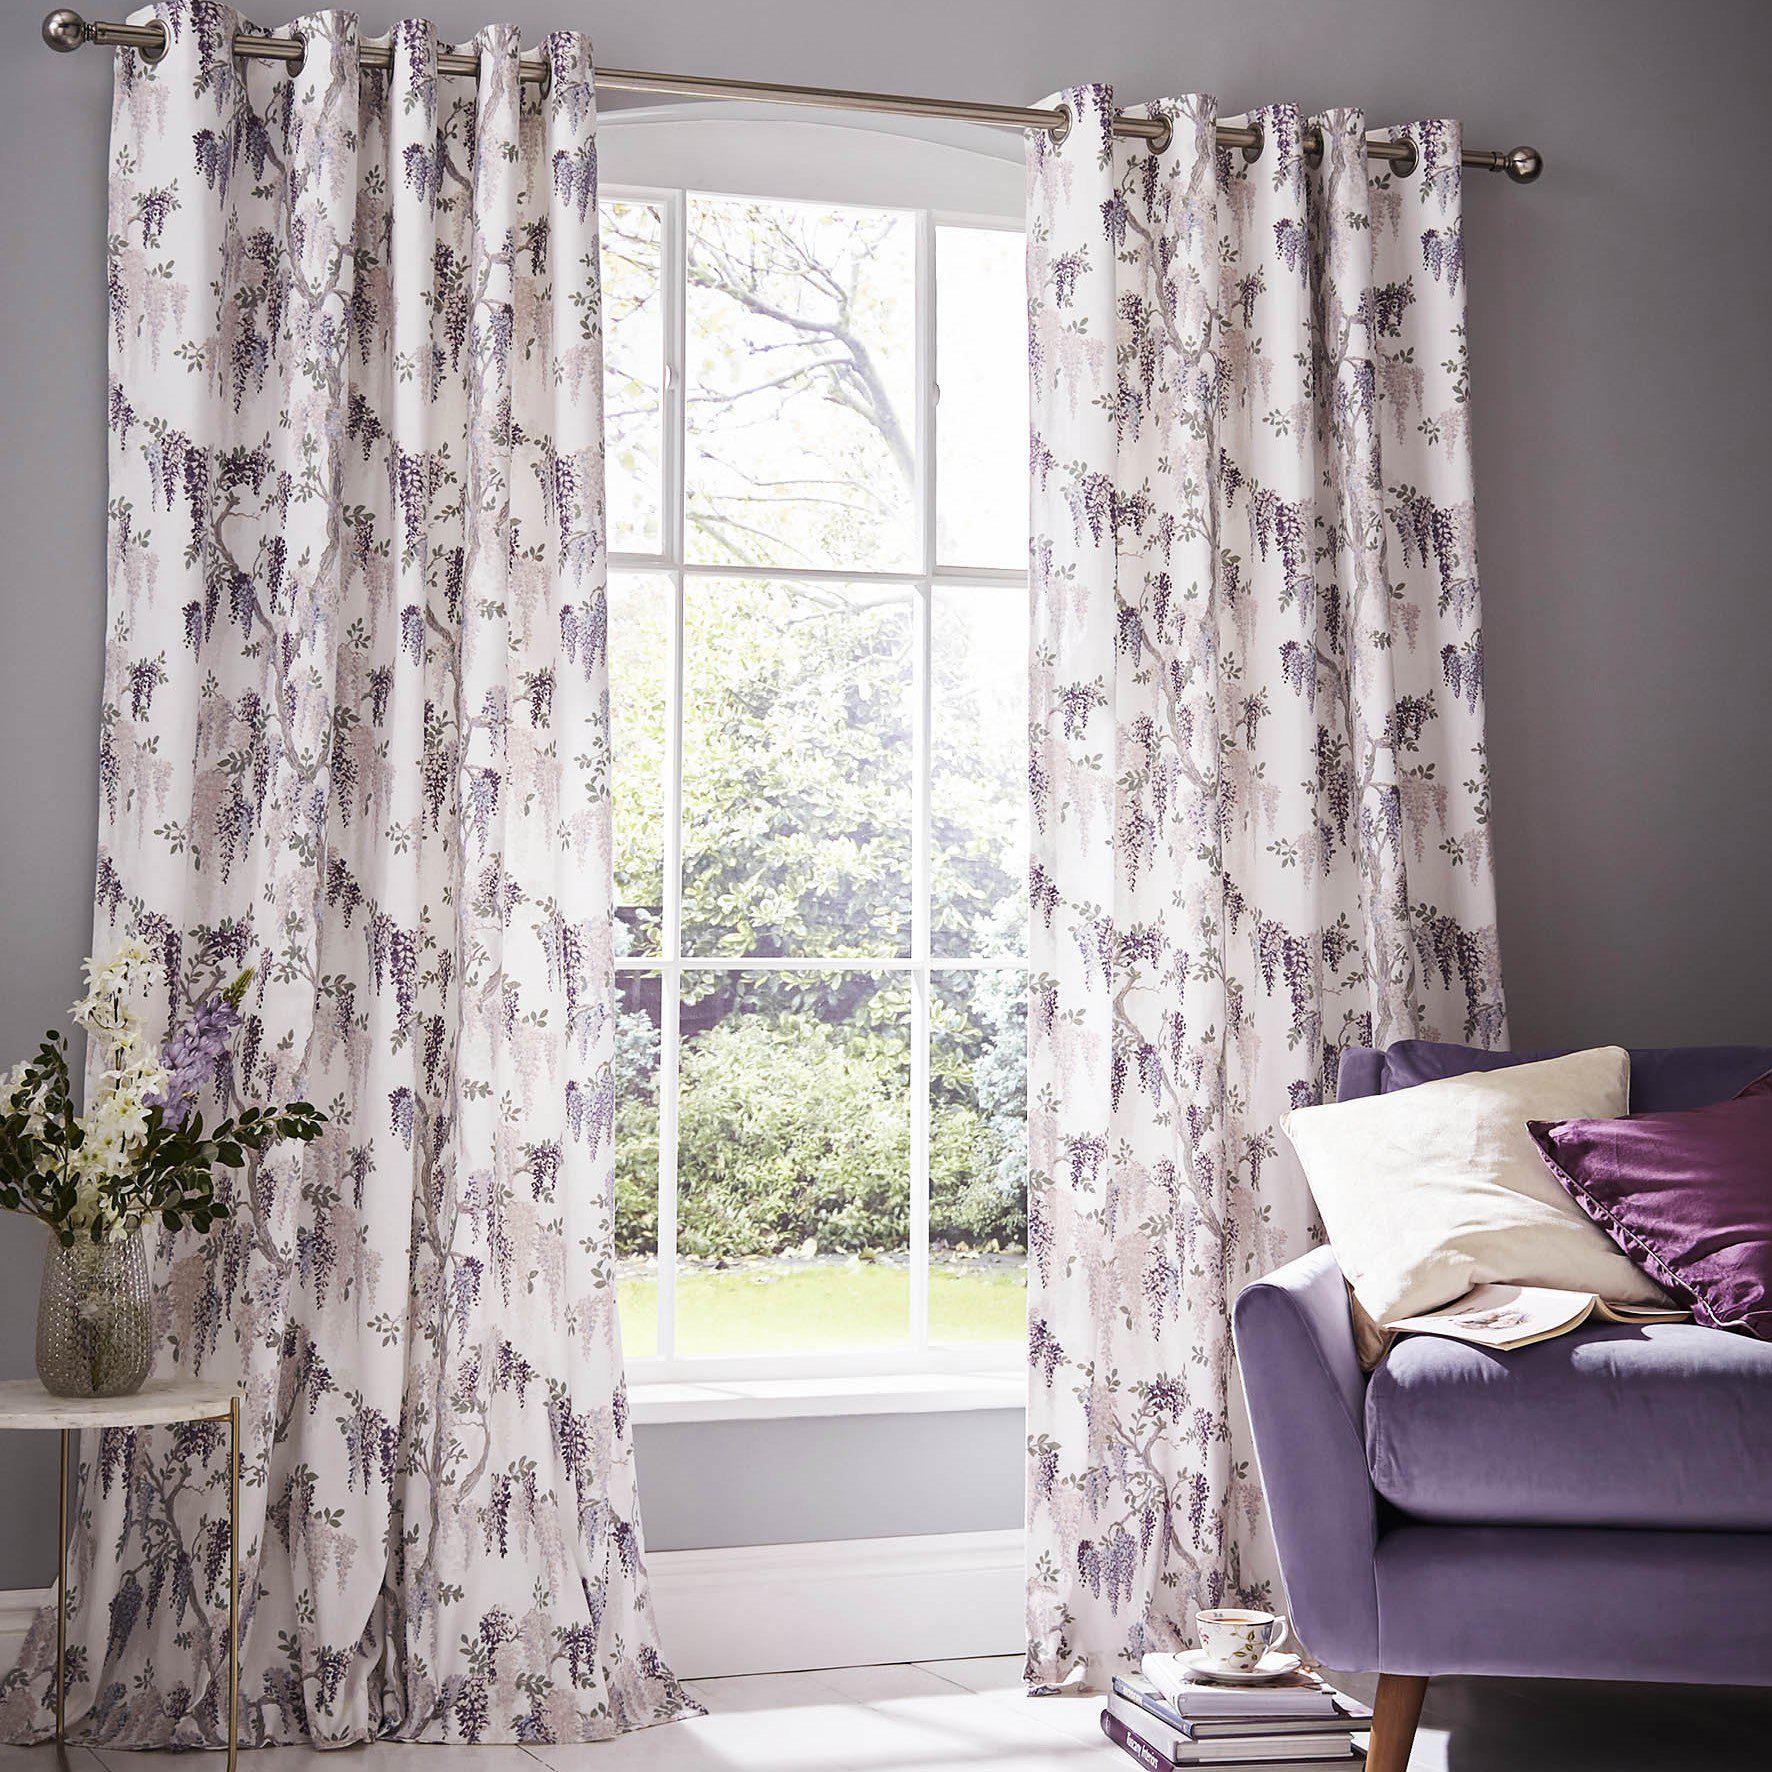 Laura Ashley Wisteria Garden Eyelet Curtains - Iris-Williamsons Factory Shop